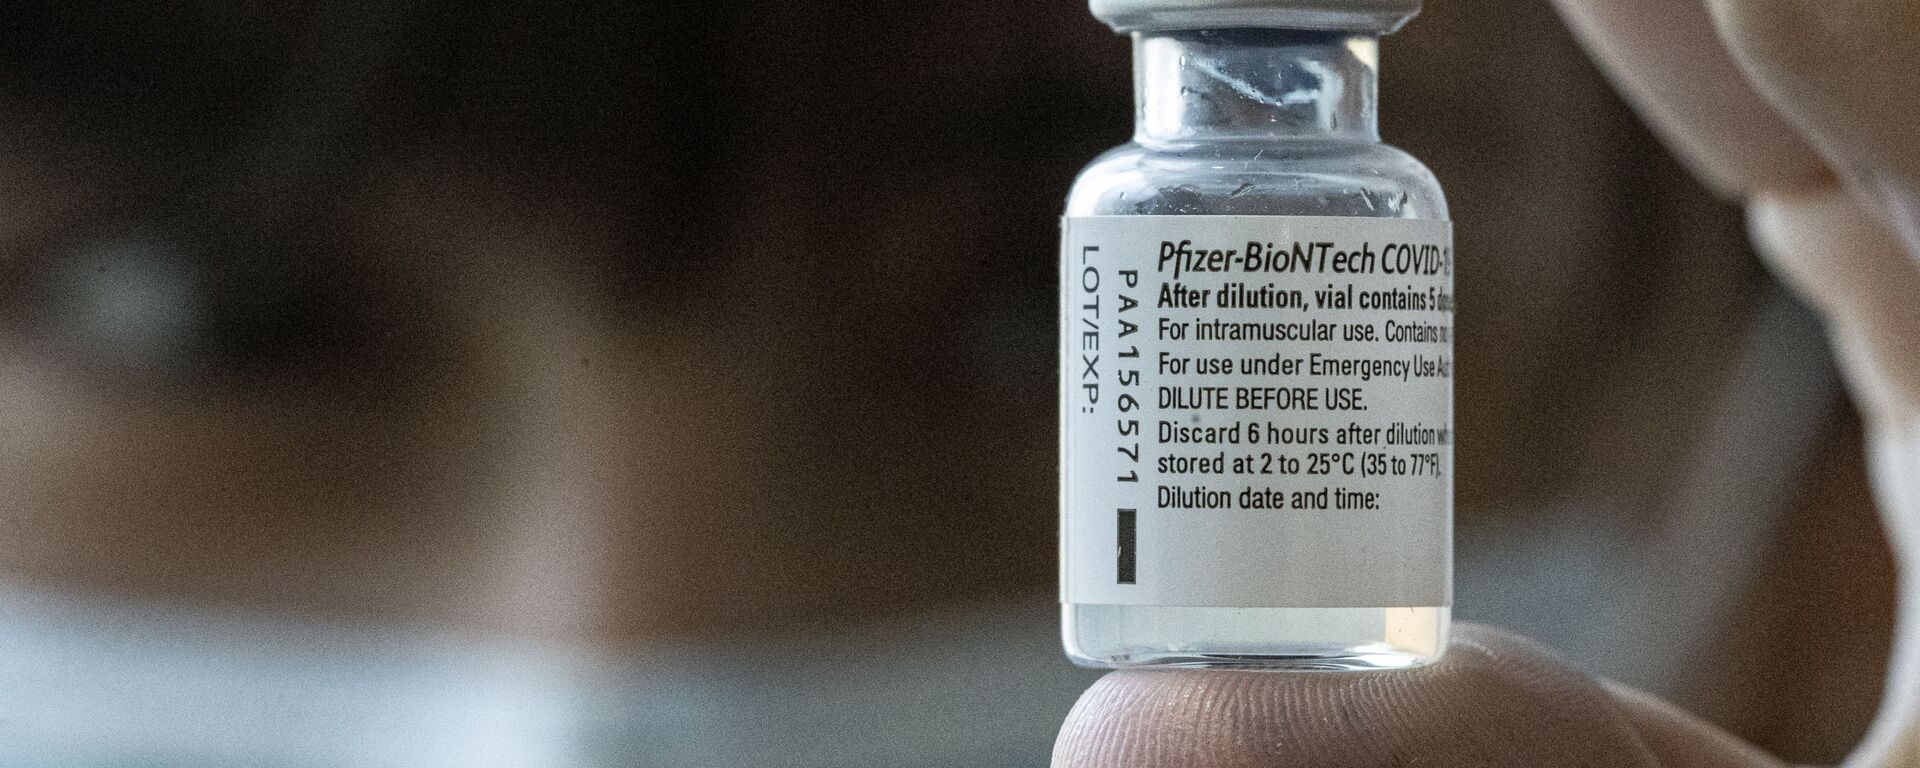 La vacuna Pfizer-BioNTech contra el COVID-19 - Sputnik Mundo, 1920, 28.06.2021